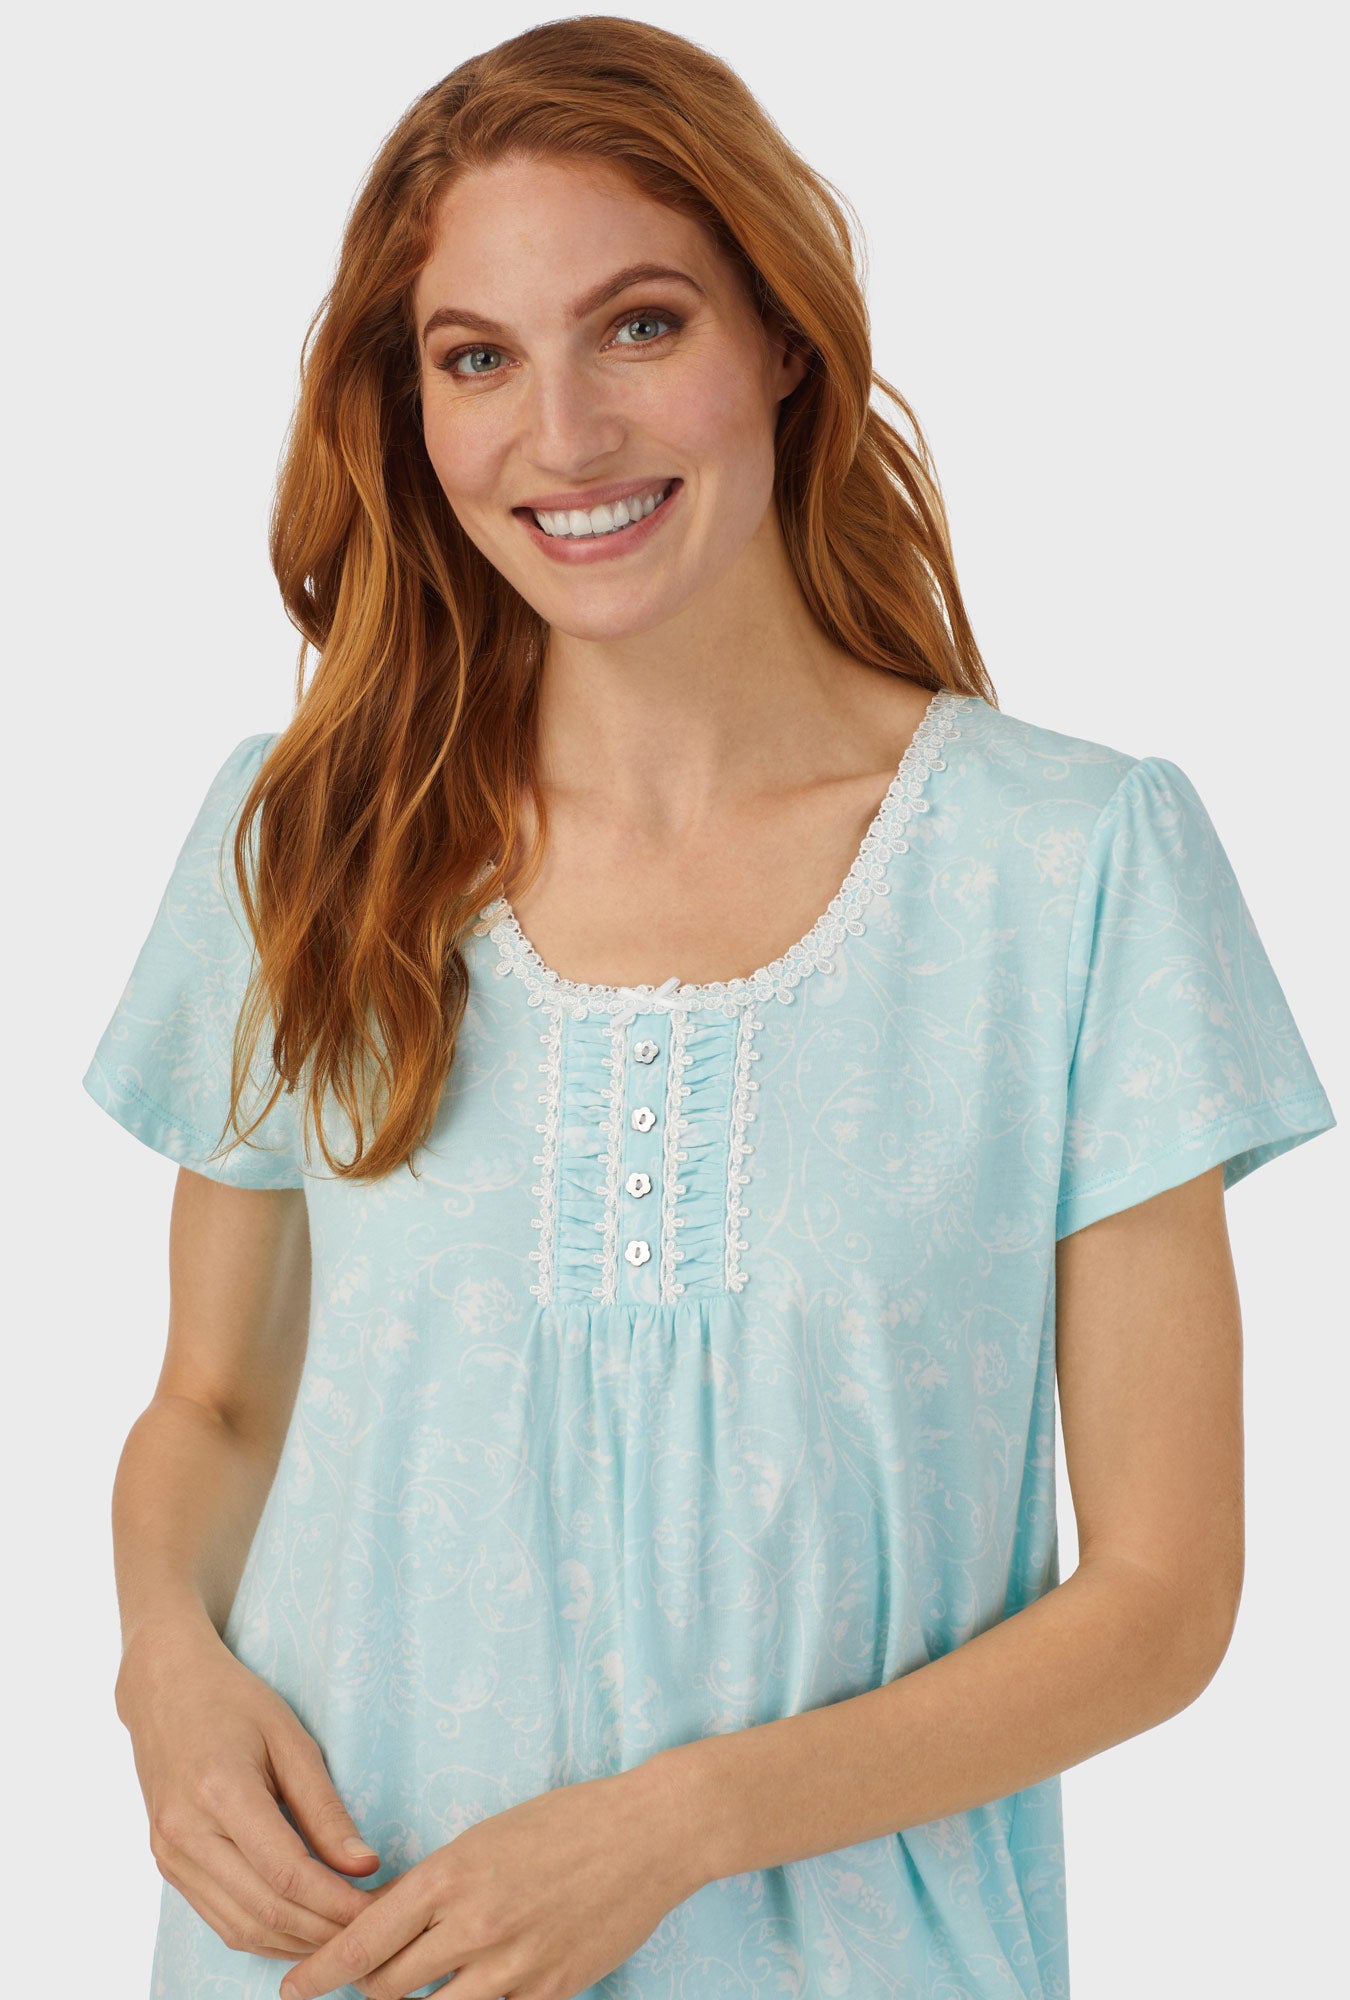 A lady wearing blue cap sleeve nightshirt with aqua scroll print.